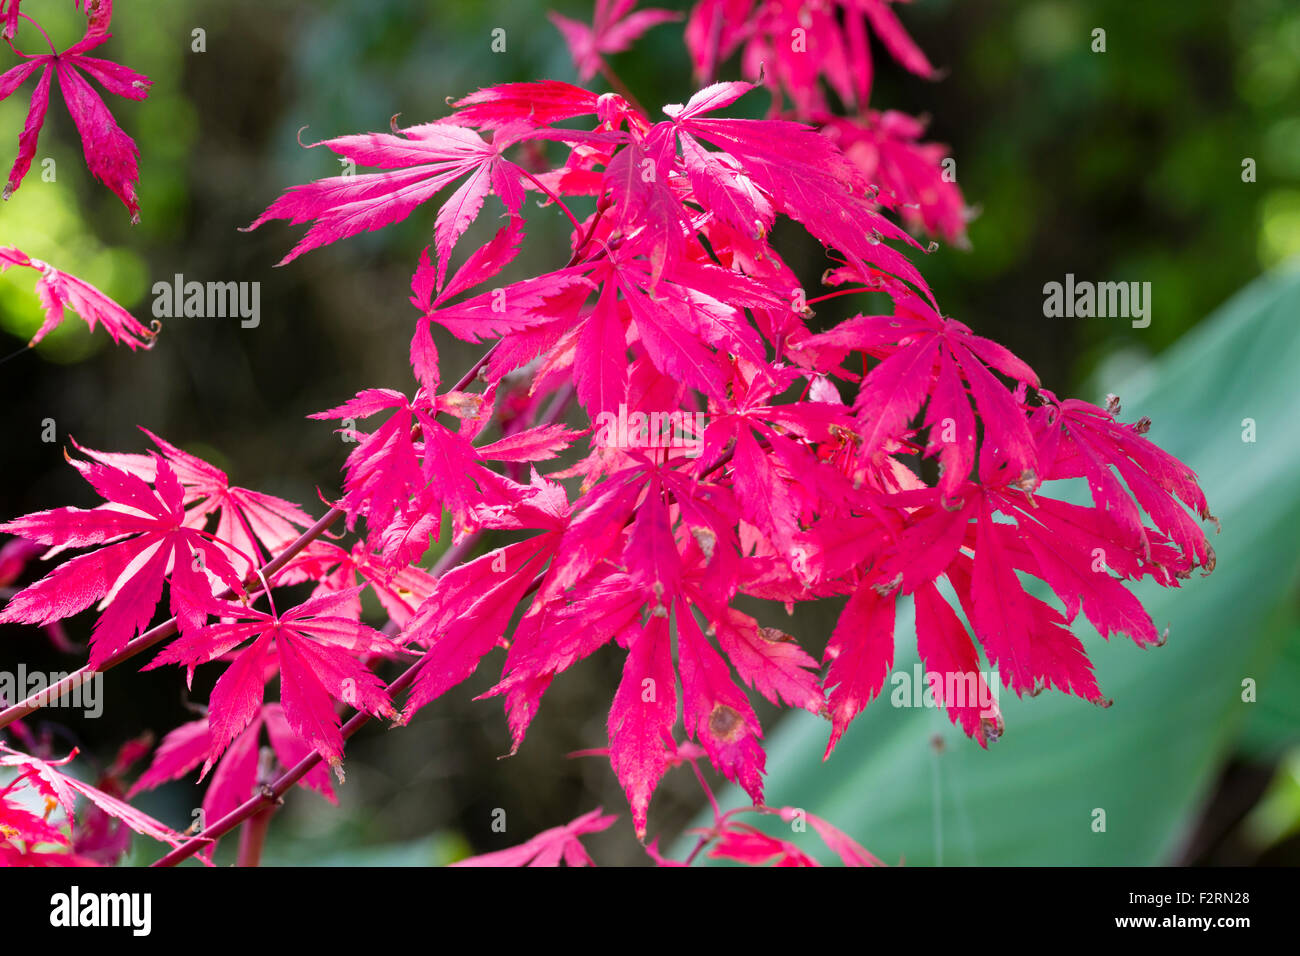 Red autumn foliage of the Japanese maple, Acer palmatum 'Autumn Showers' Stock Photo